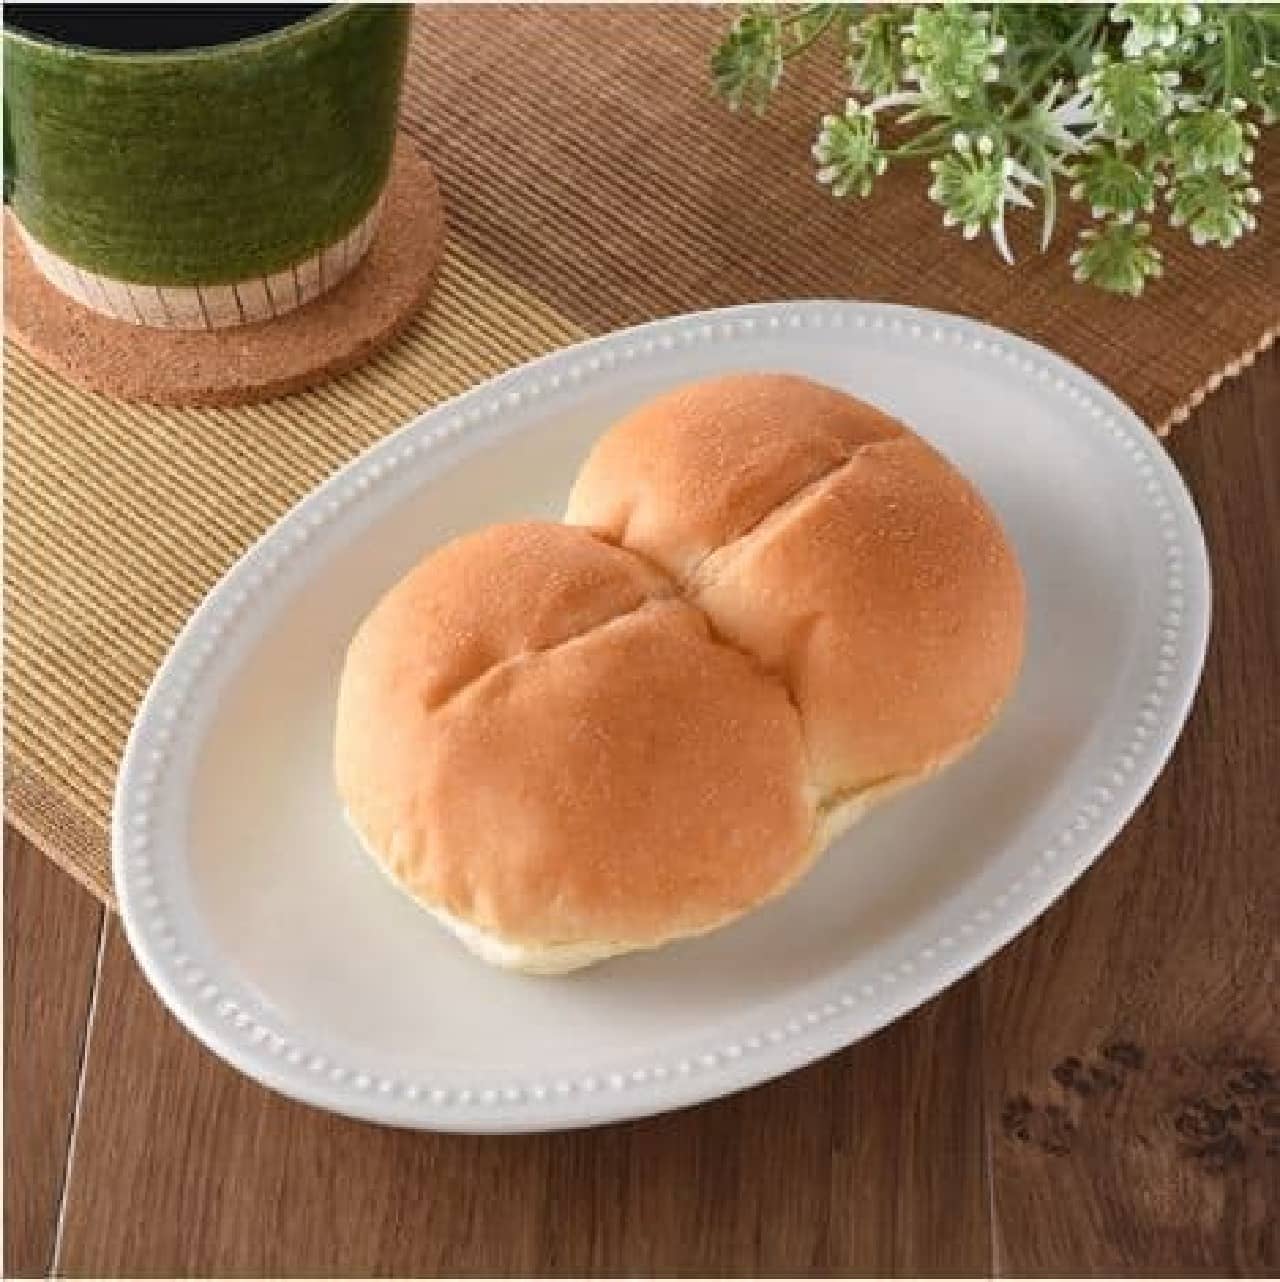 FamilyMart "Shimijuwa Condensed Milk Bread"